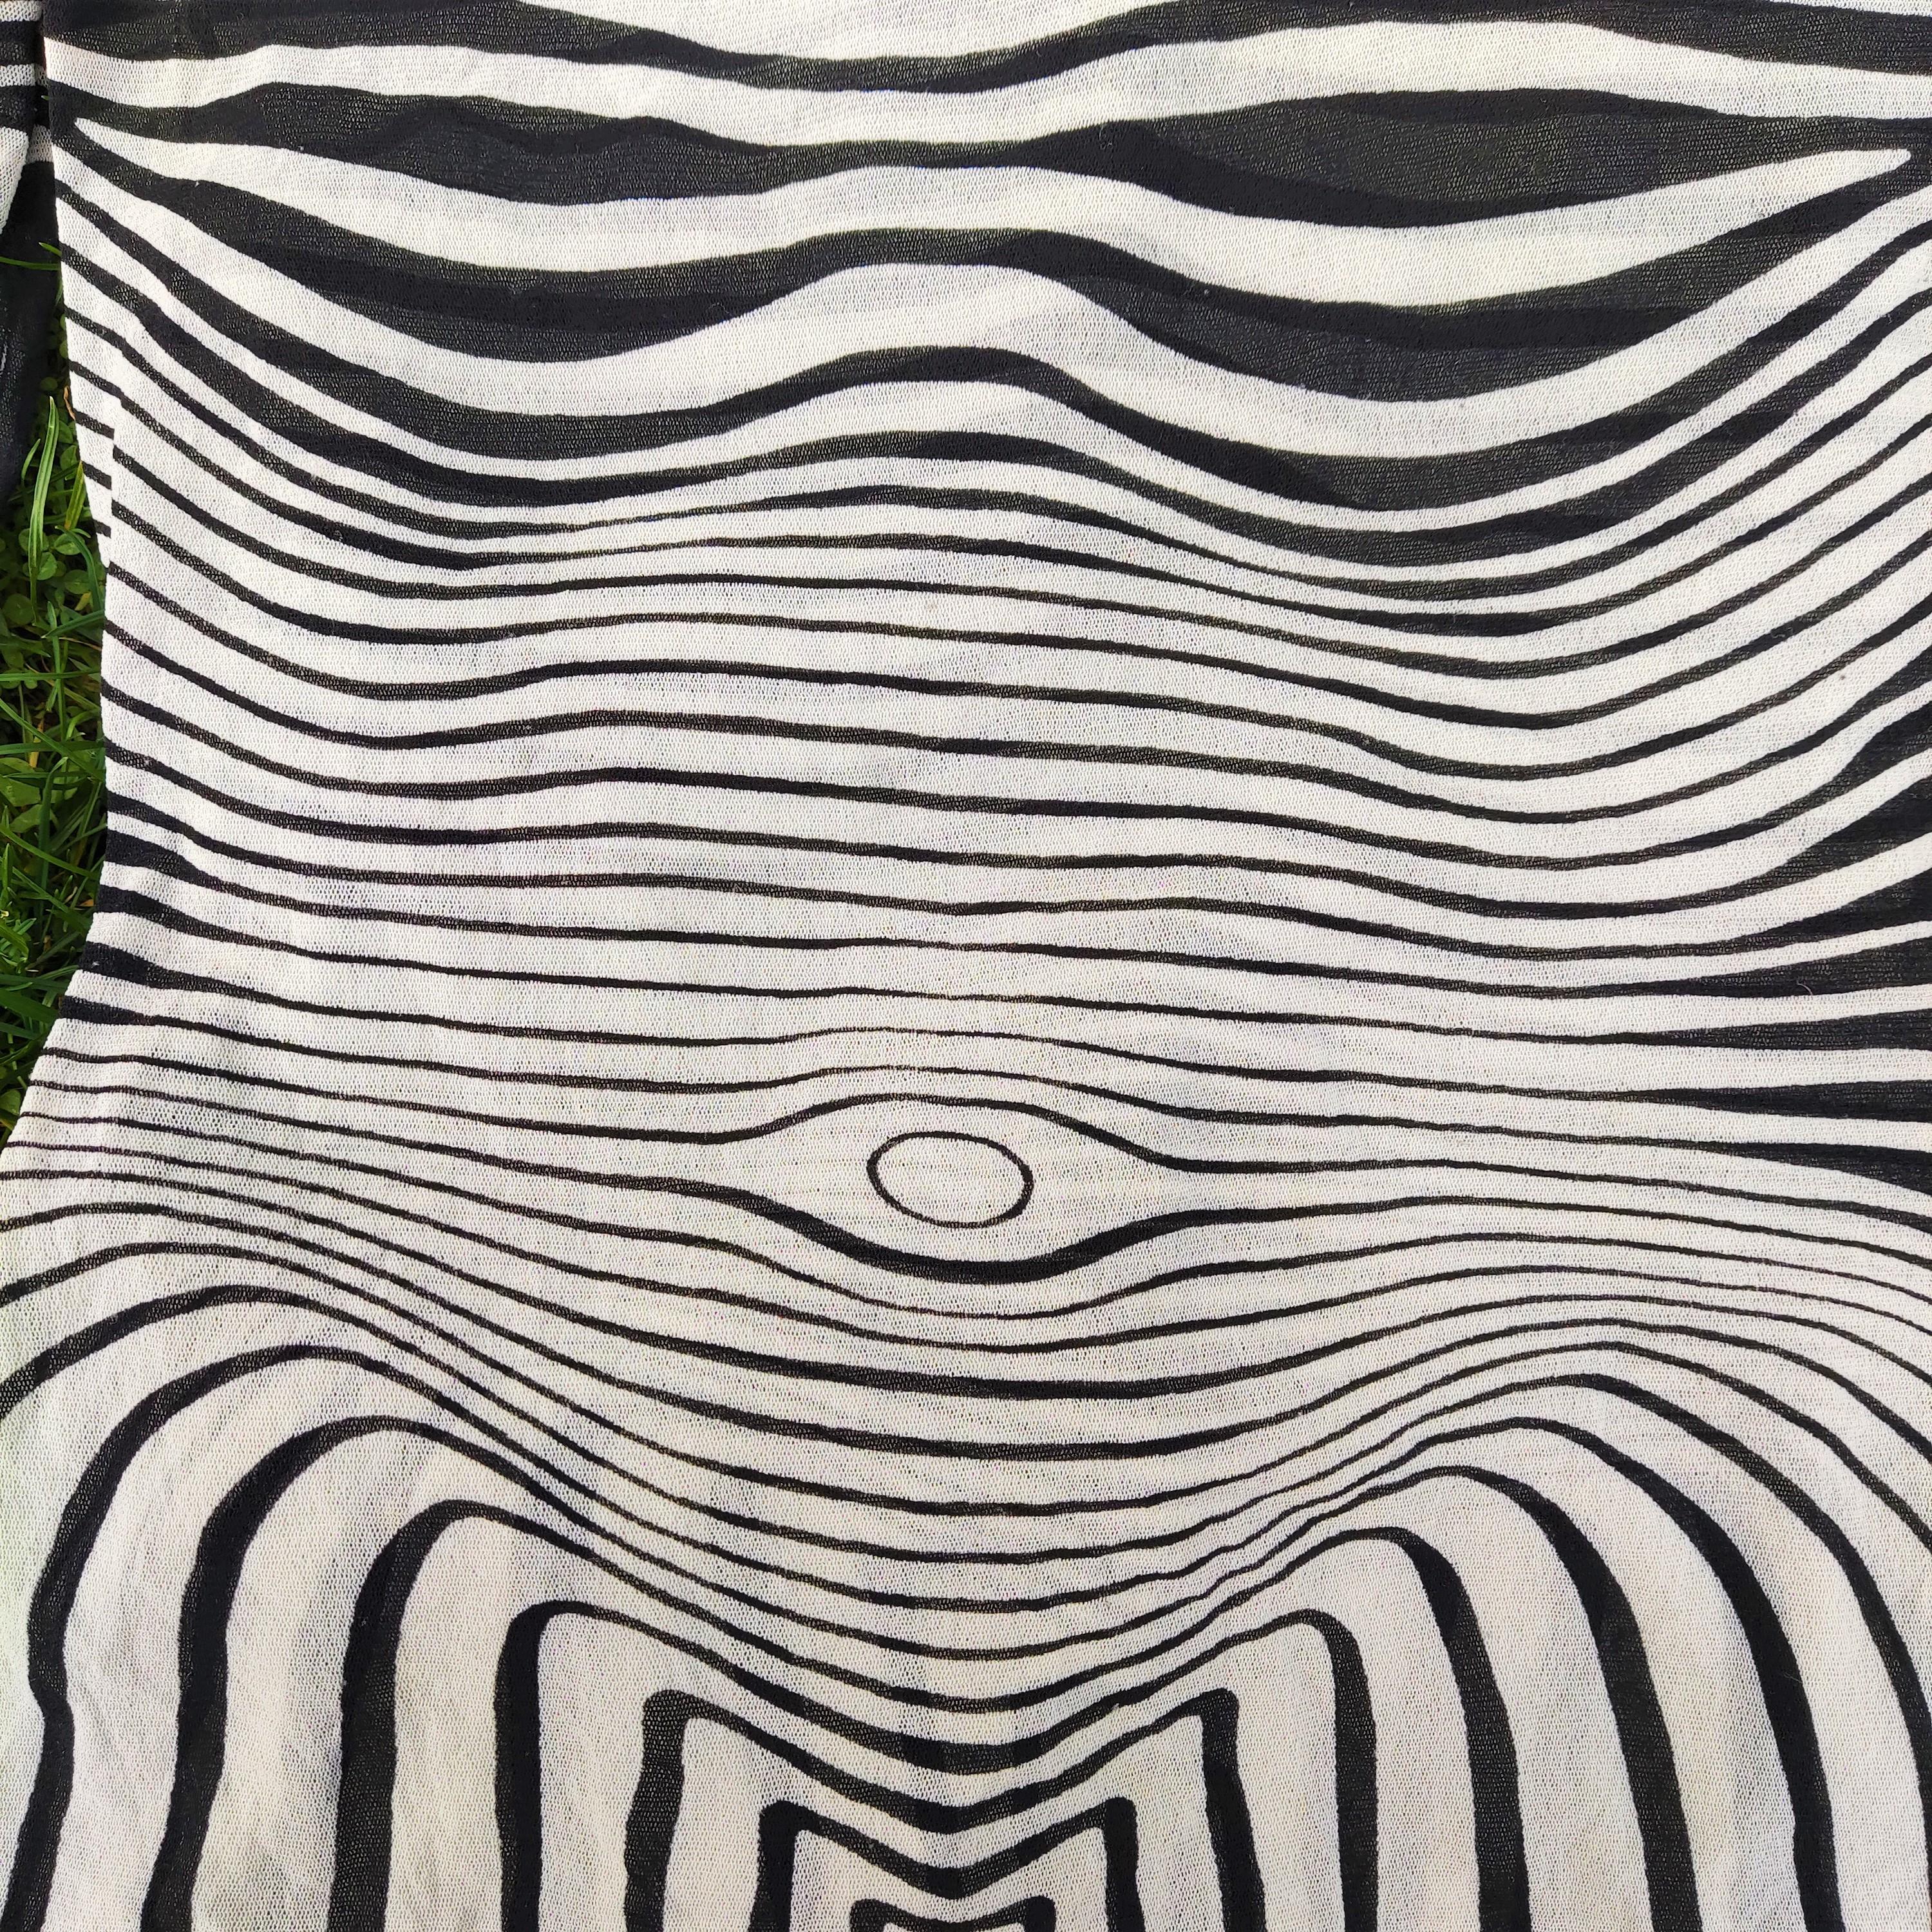 Jean Paul Gaultier Cyberbaba Zebra Optical Illusion Striped Transparent Mesh Top 4